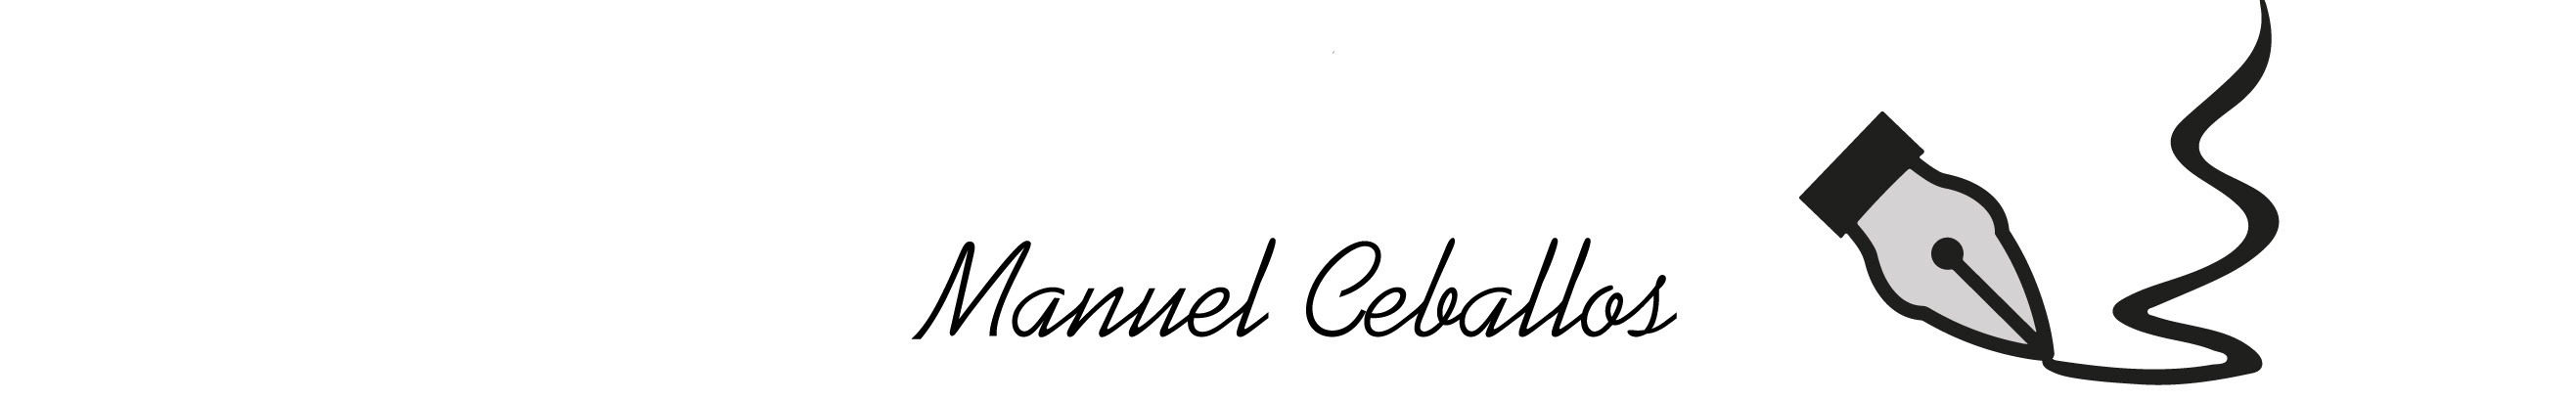 Manuel Ceballos's profile banner